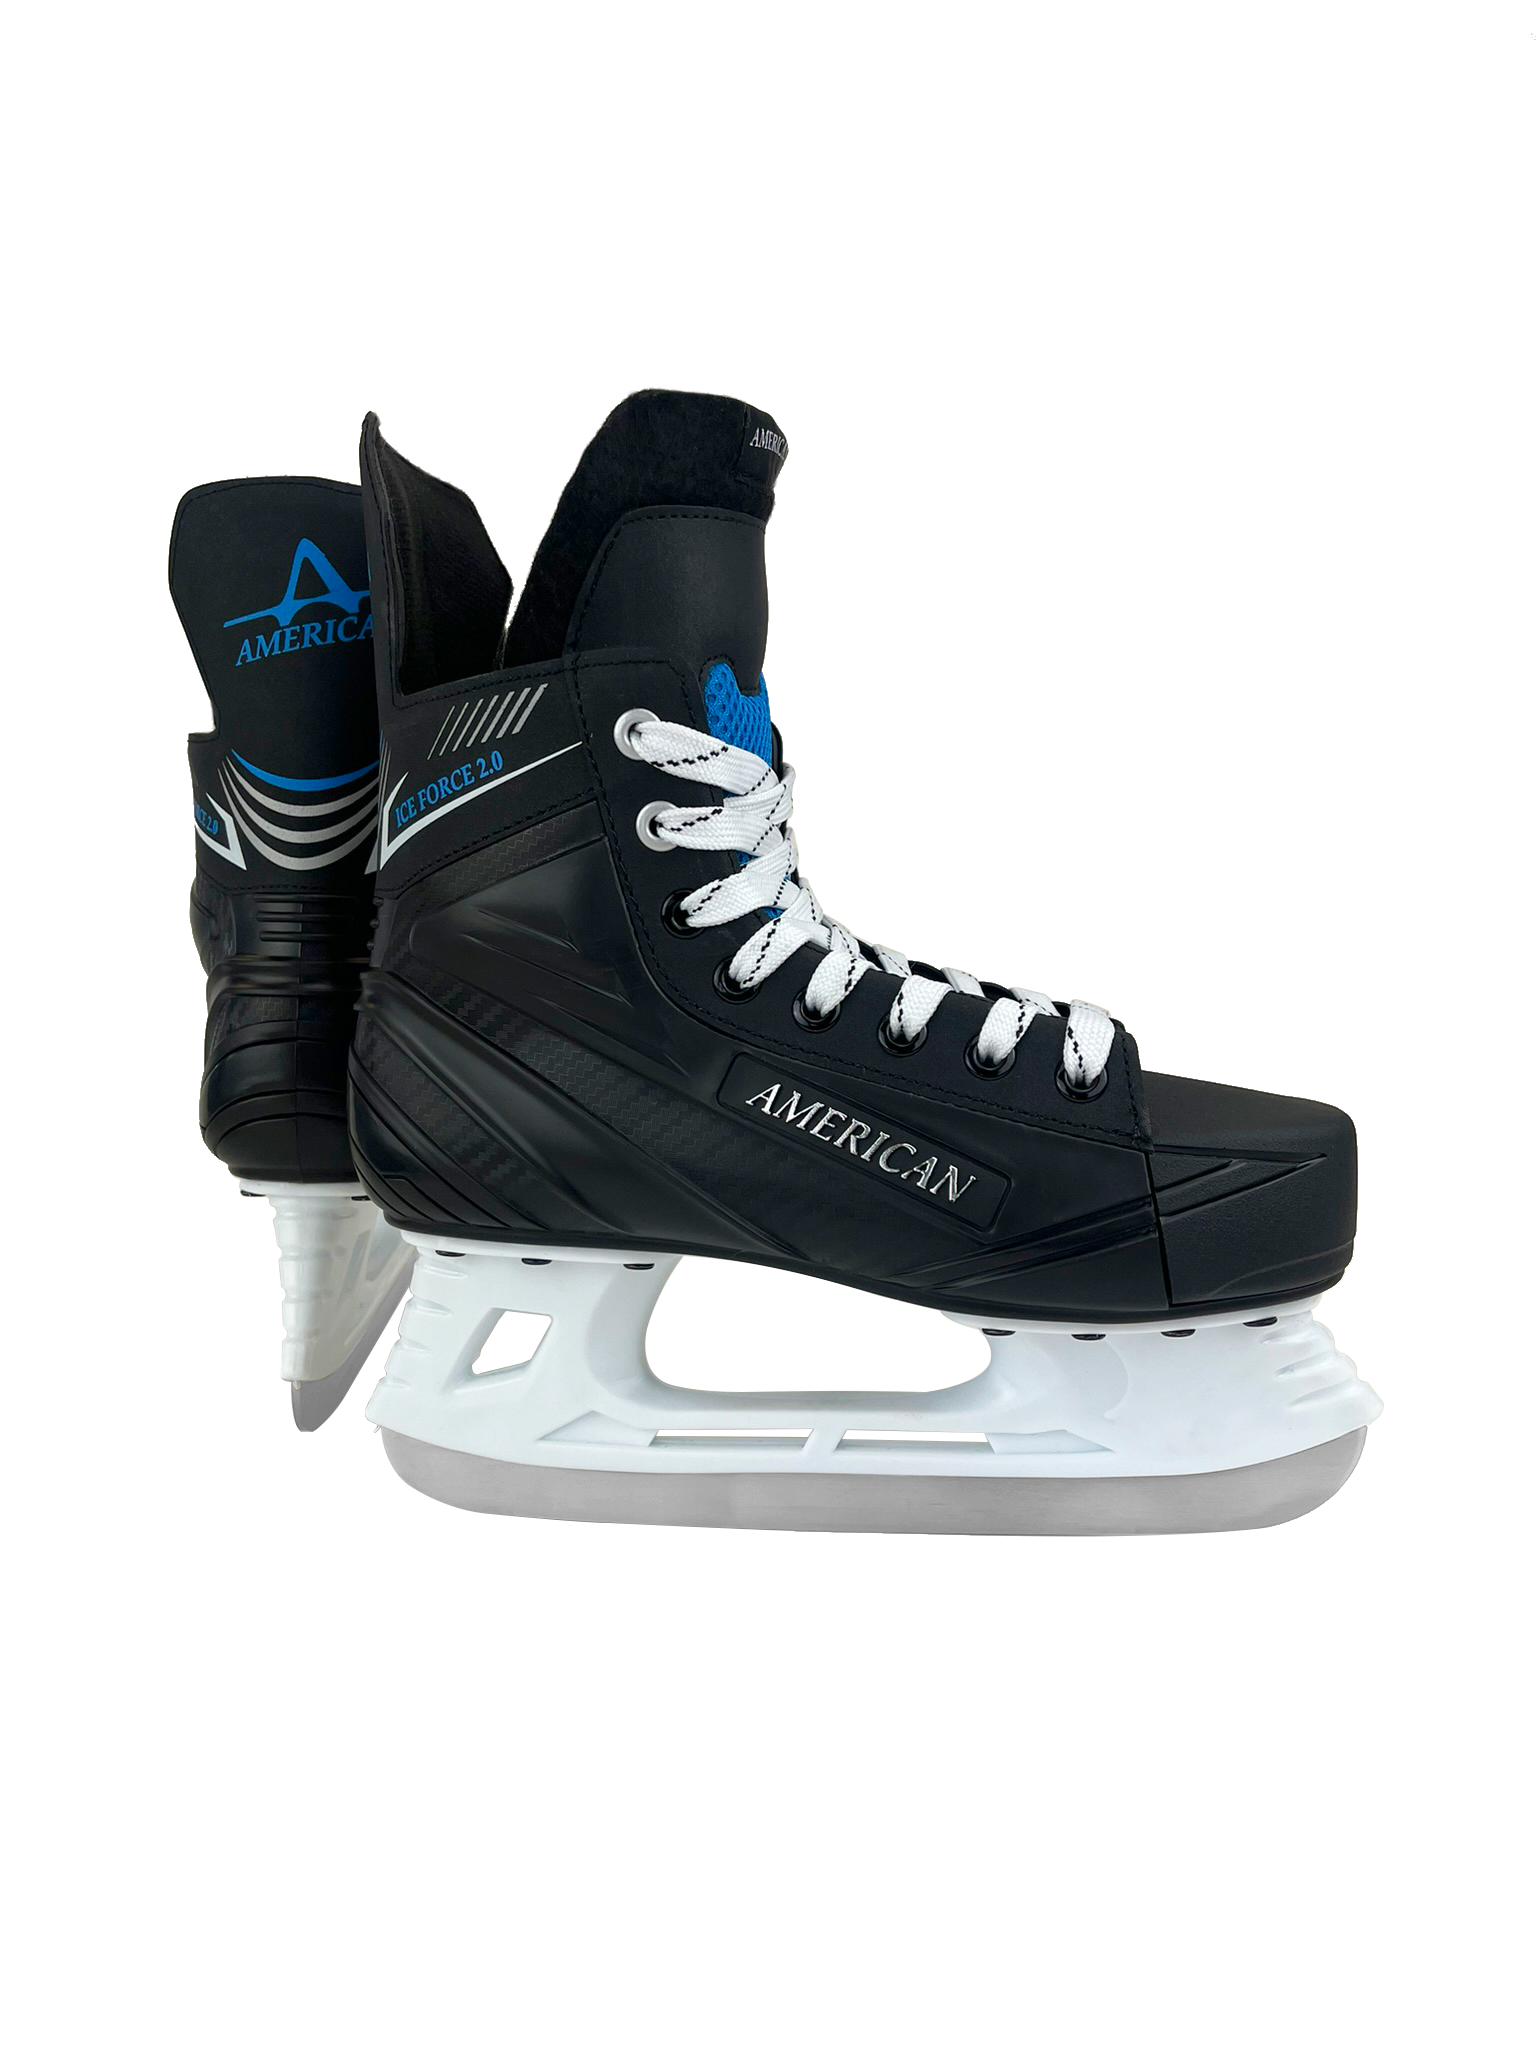 Mens American Ice Force 2.0 Hockey Skate